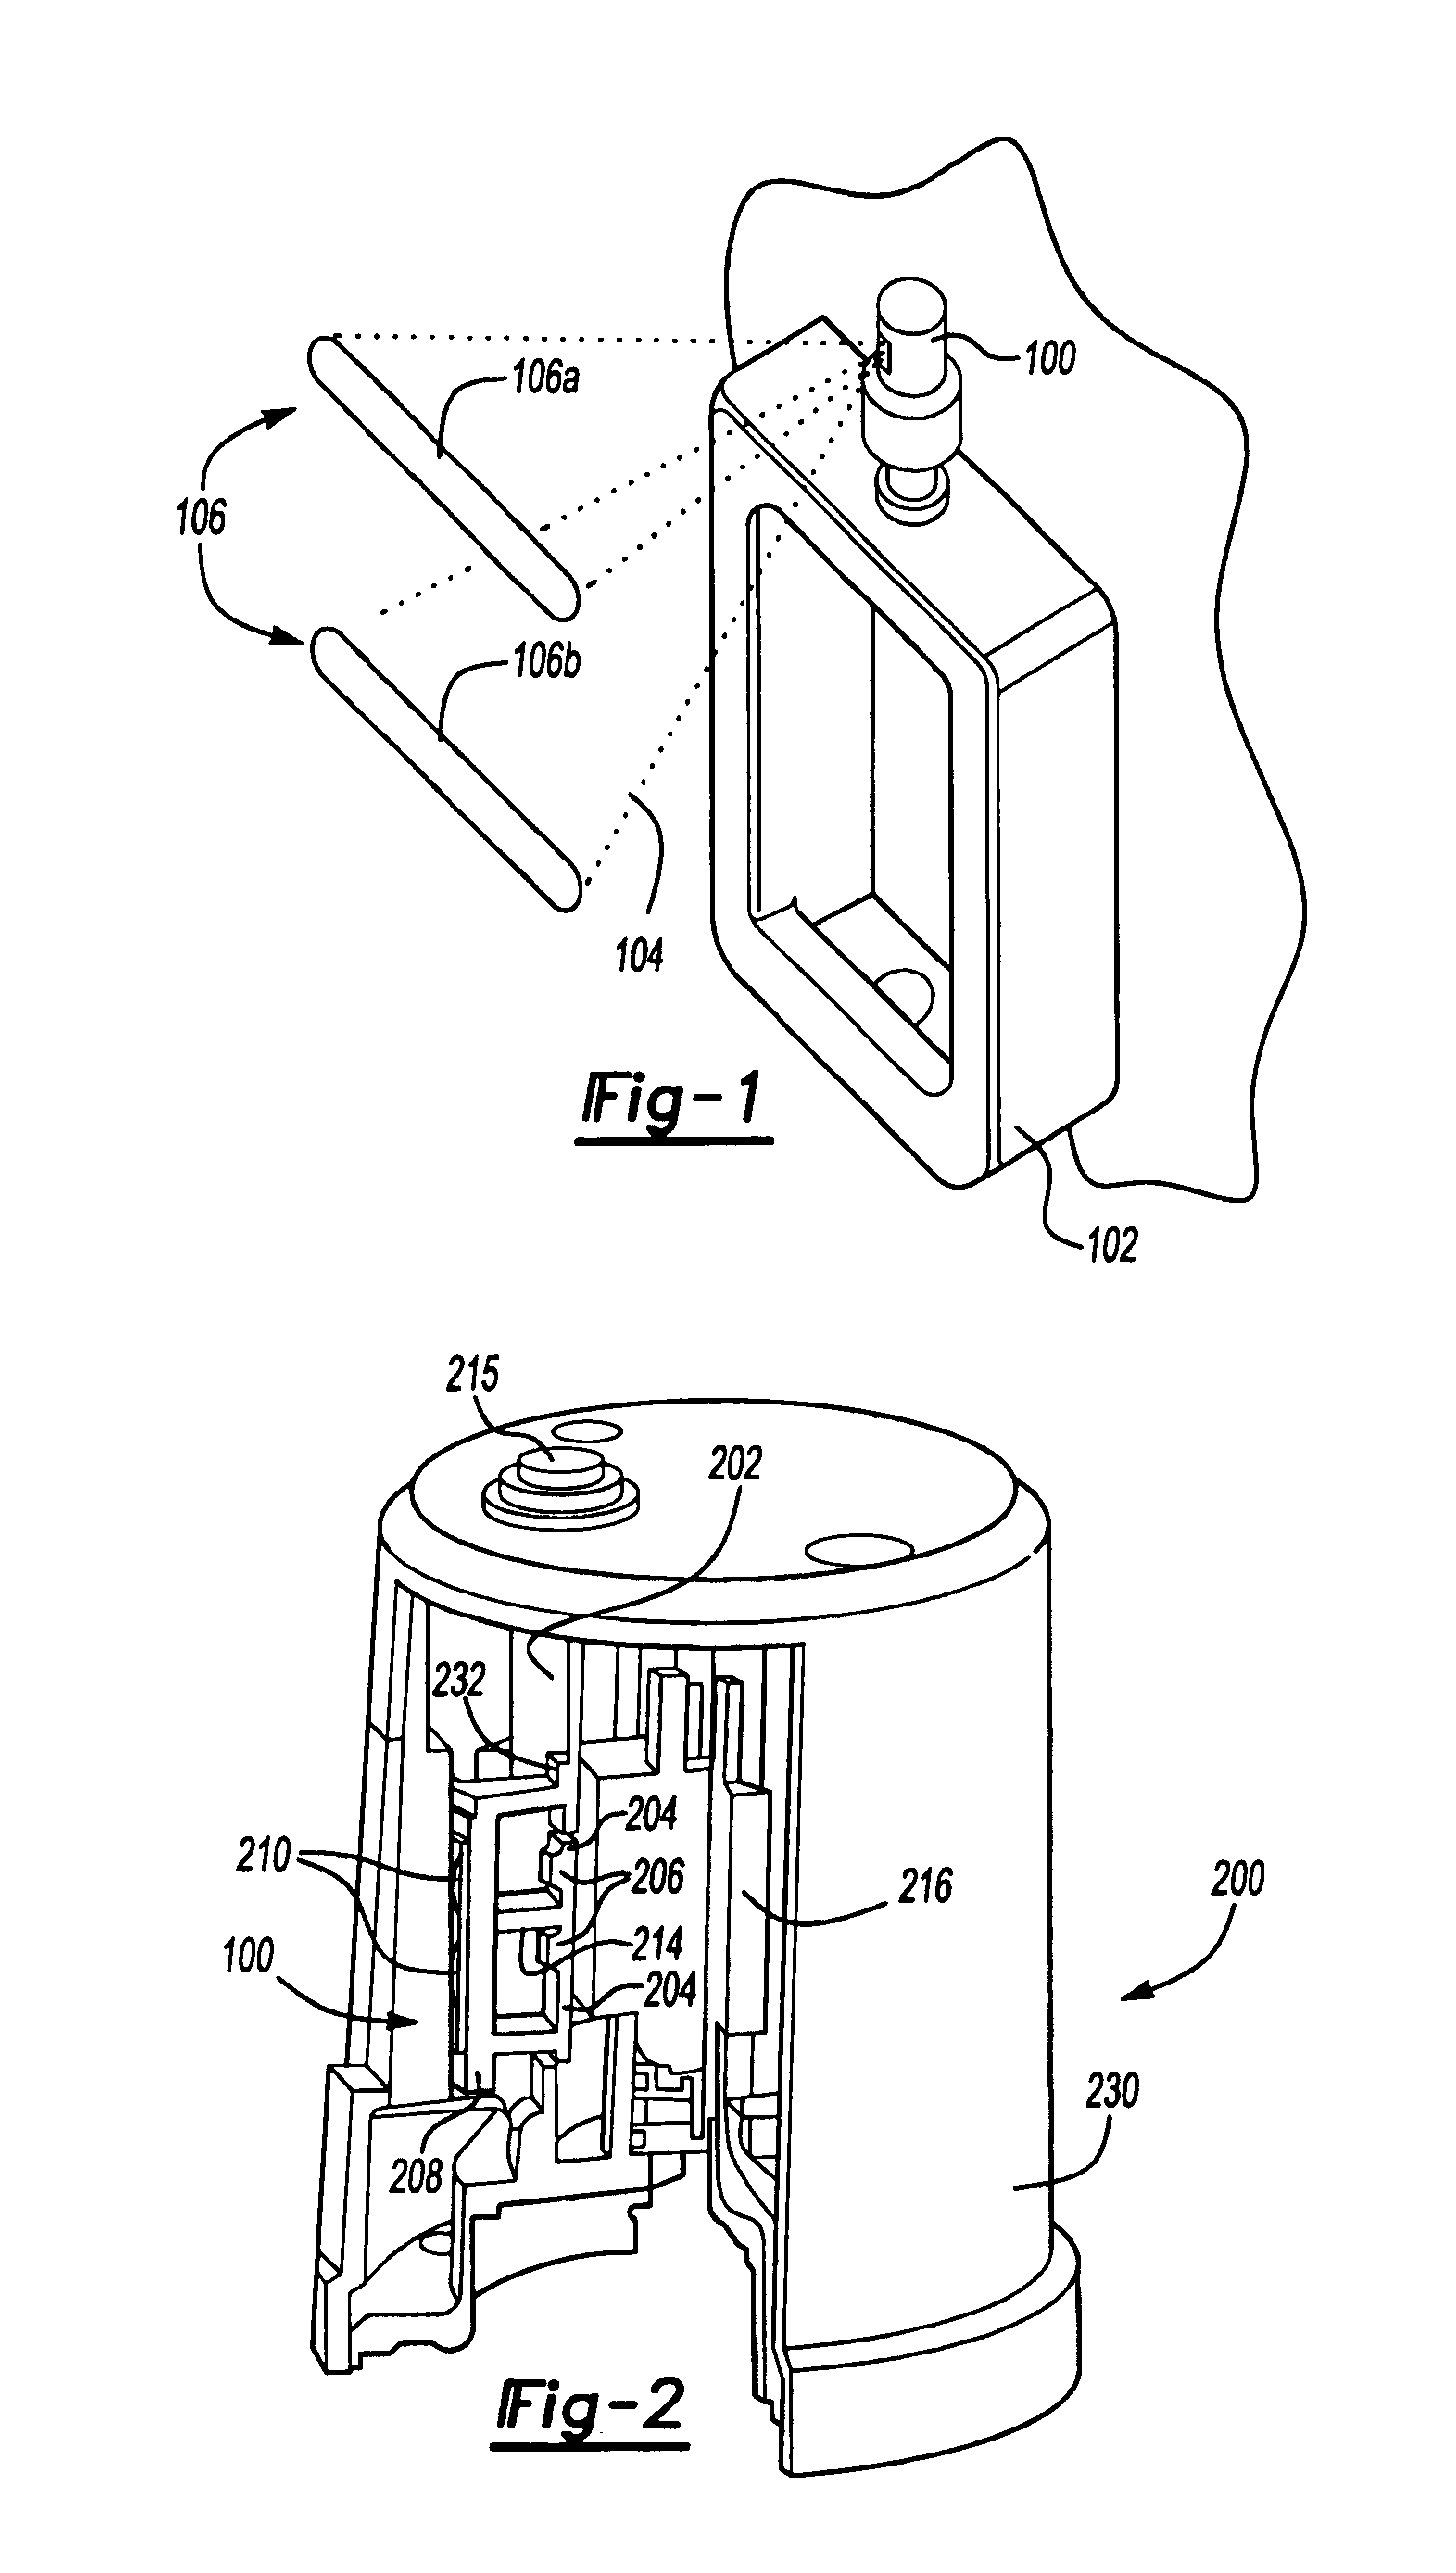 Sensor for washroom device with a non-circular sensing zone